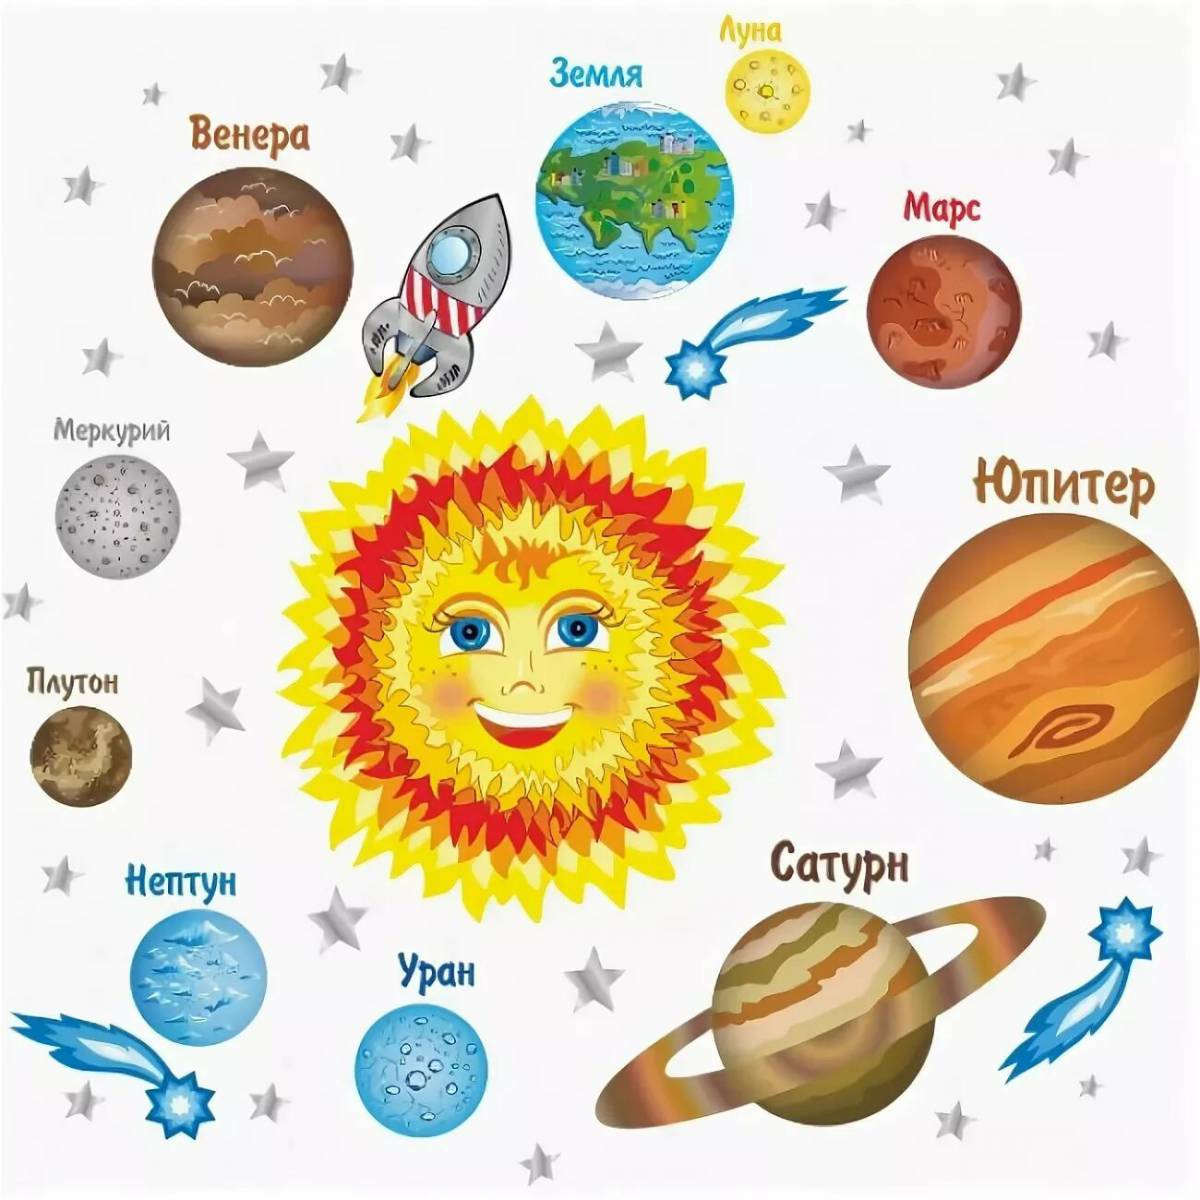 Планеты солнечной системы по порядку от солнца с названиями #14